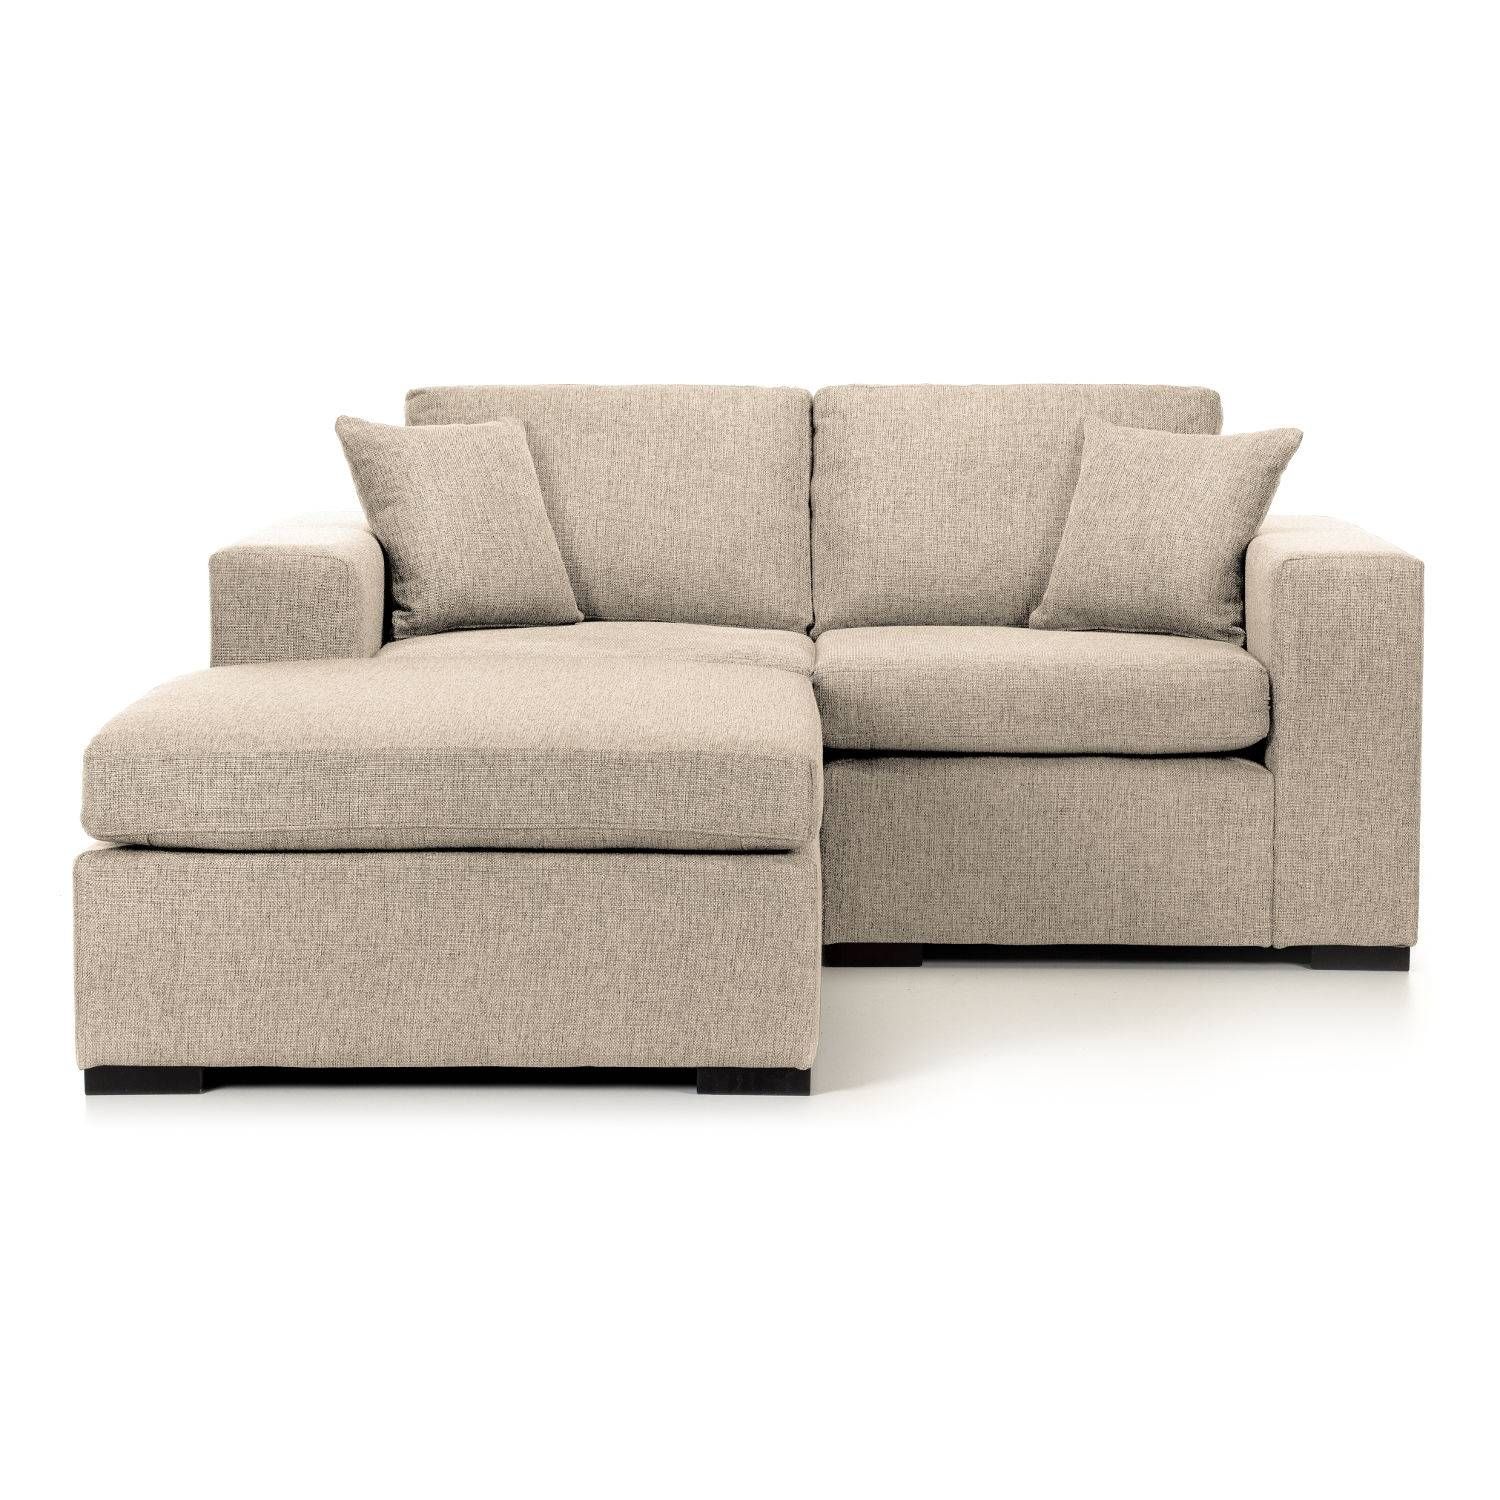 2017 Latest Small Modular Sectional Sofa